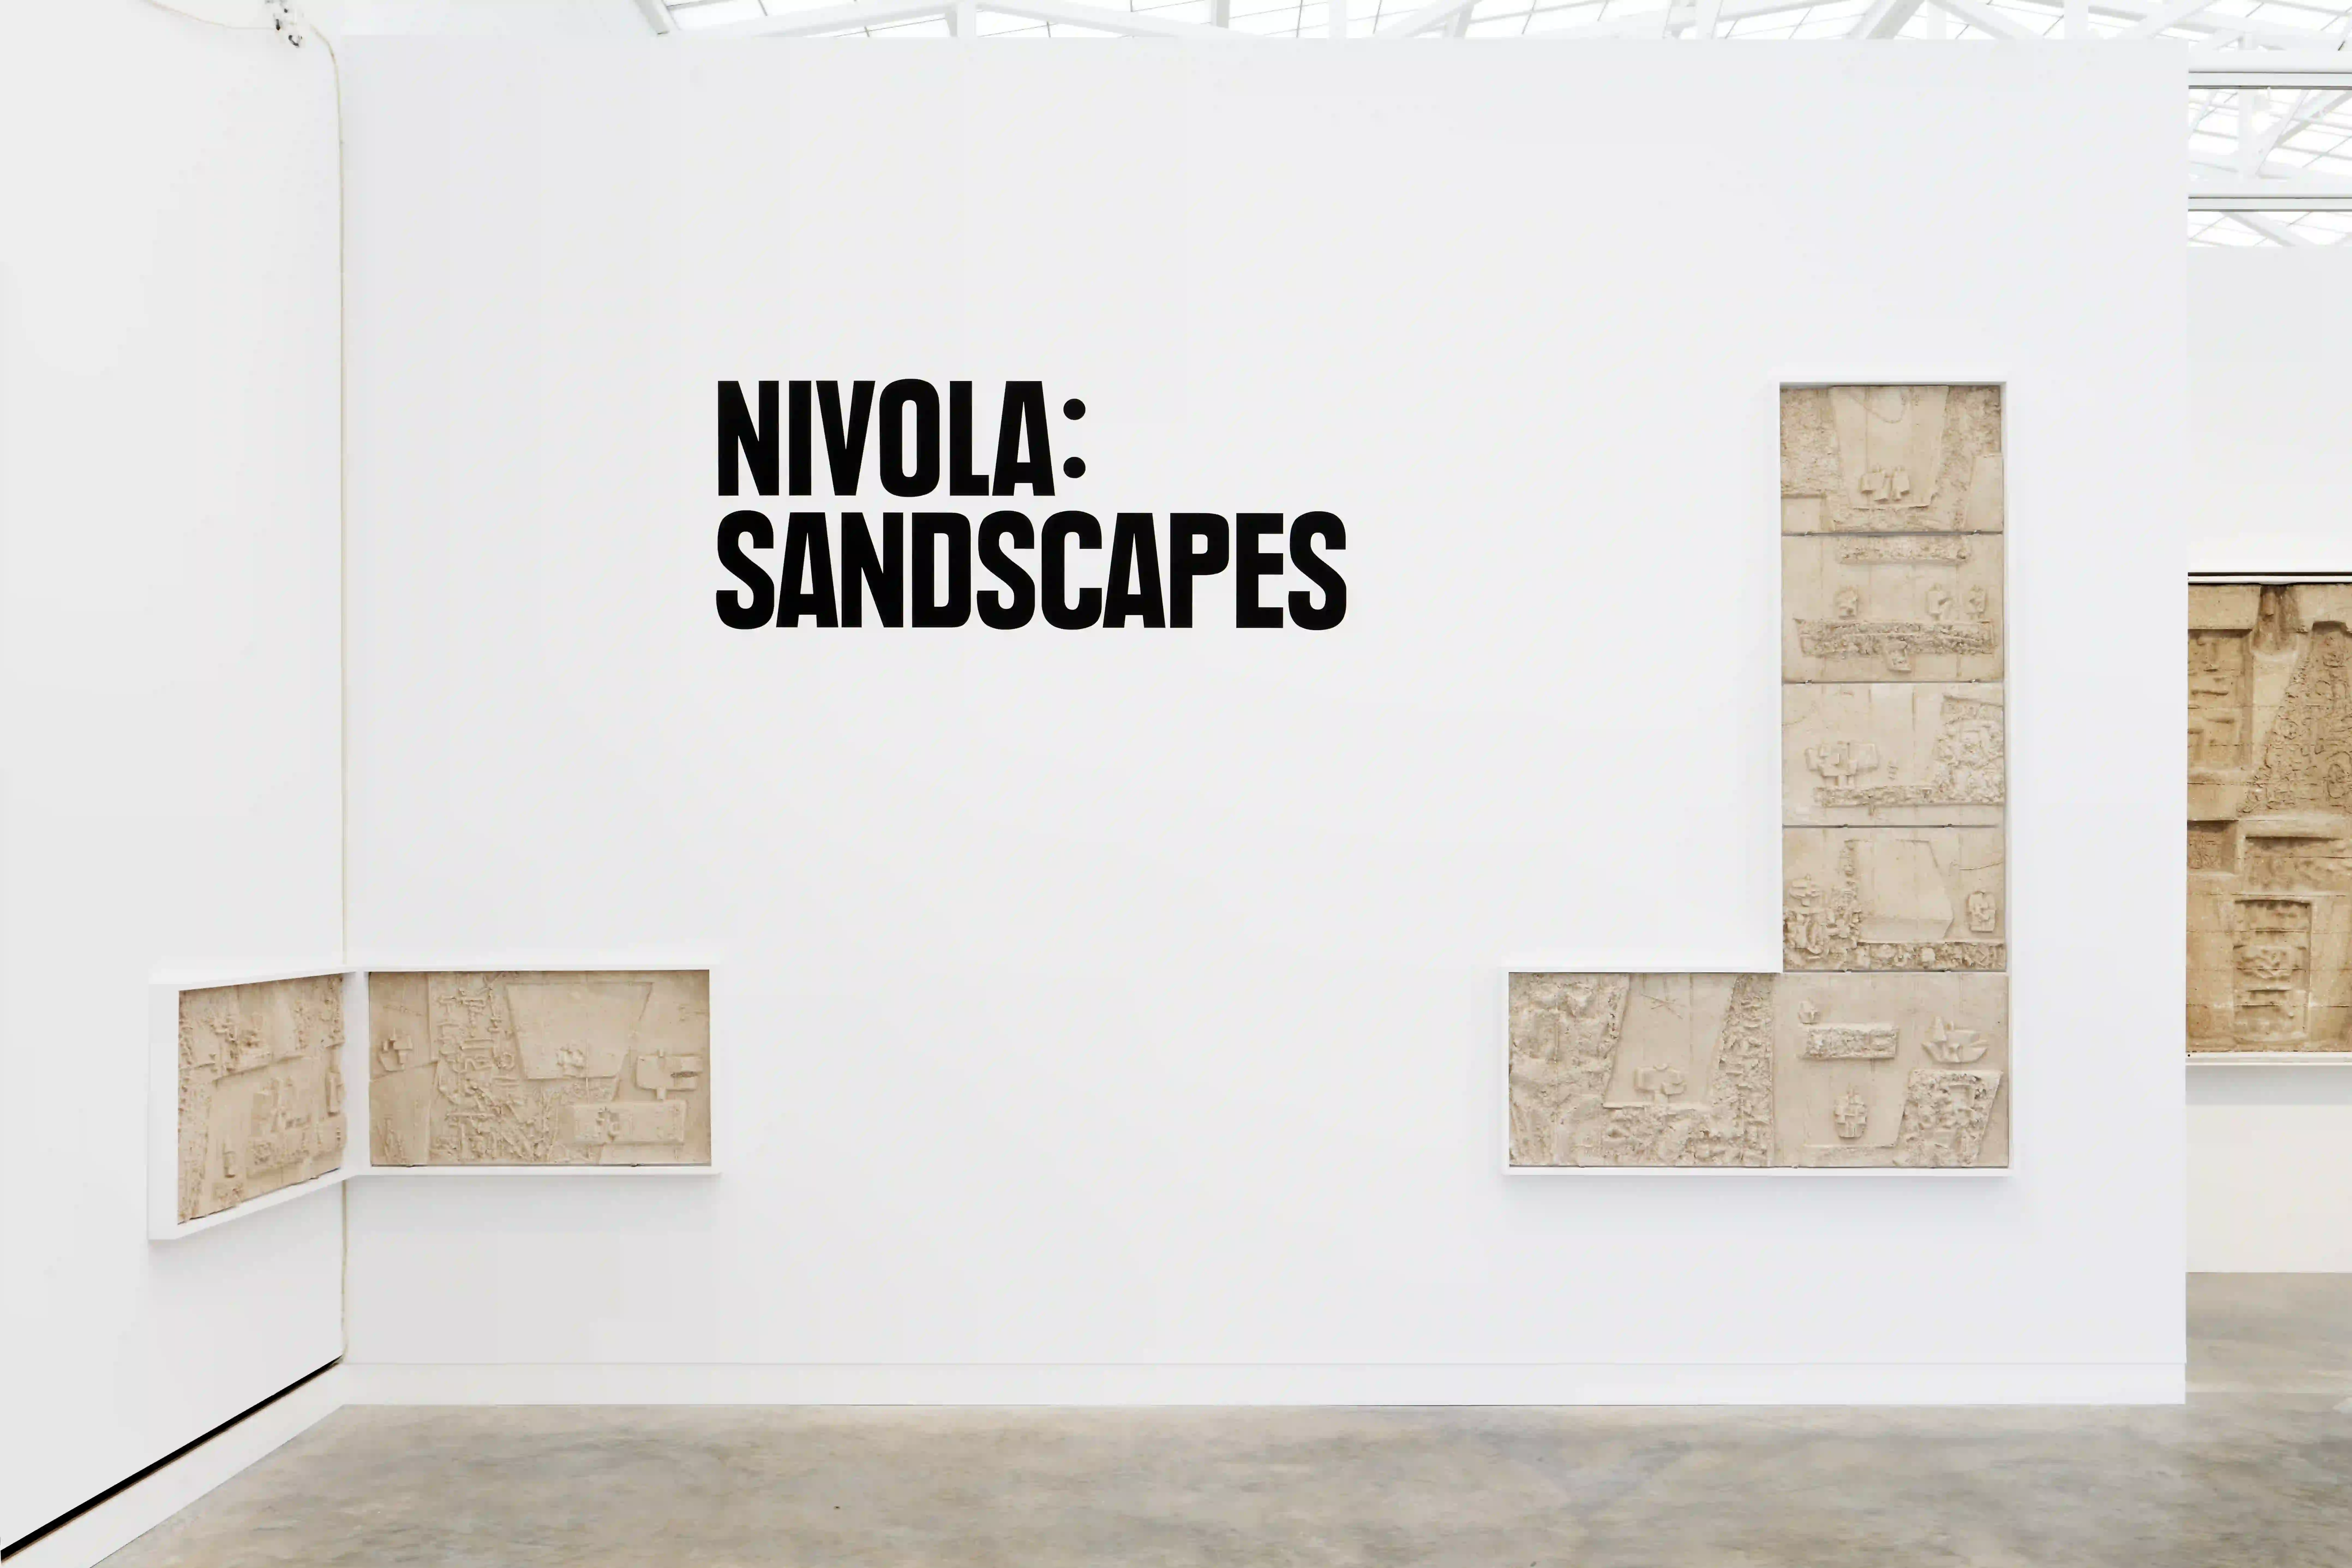 Entryway of the exhibition Nivola: Sandscapes at Magazzino Italian Art, Cold Spring, New York